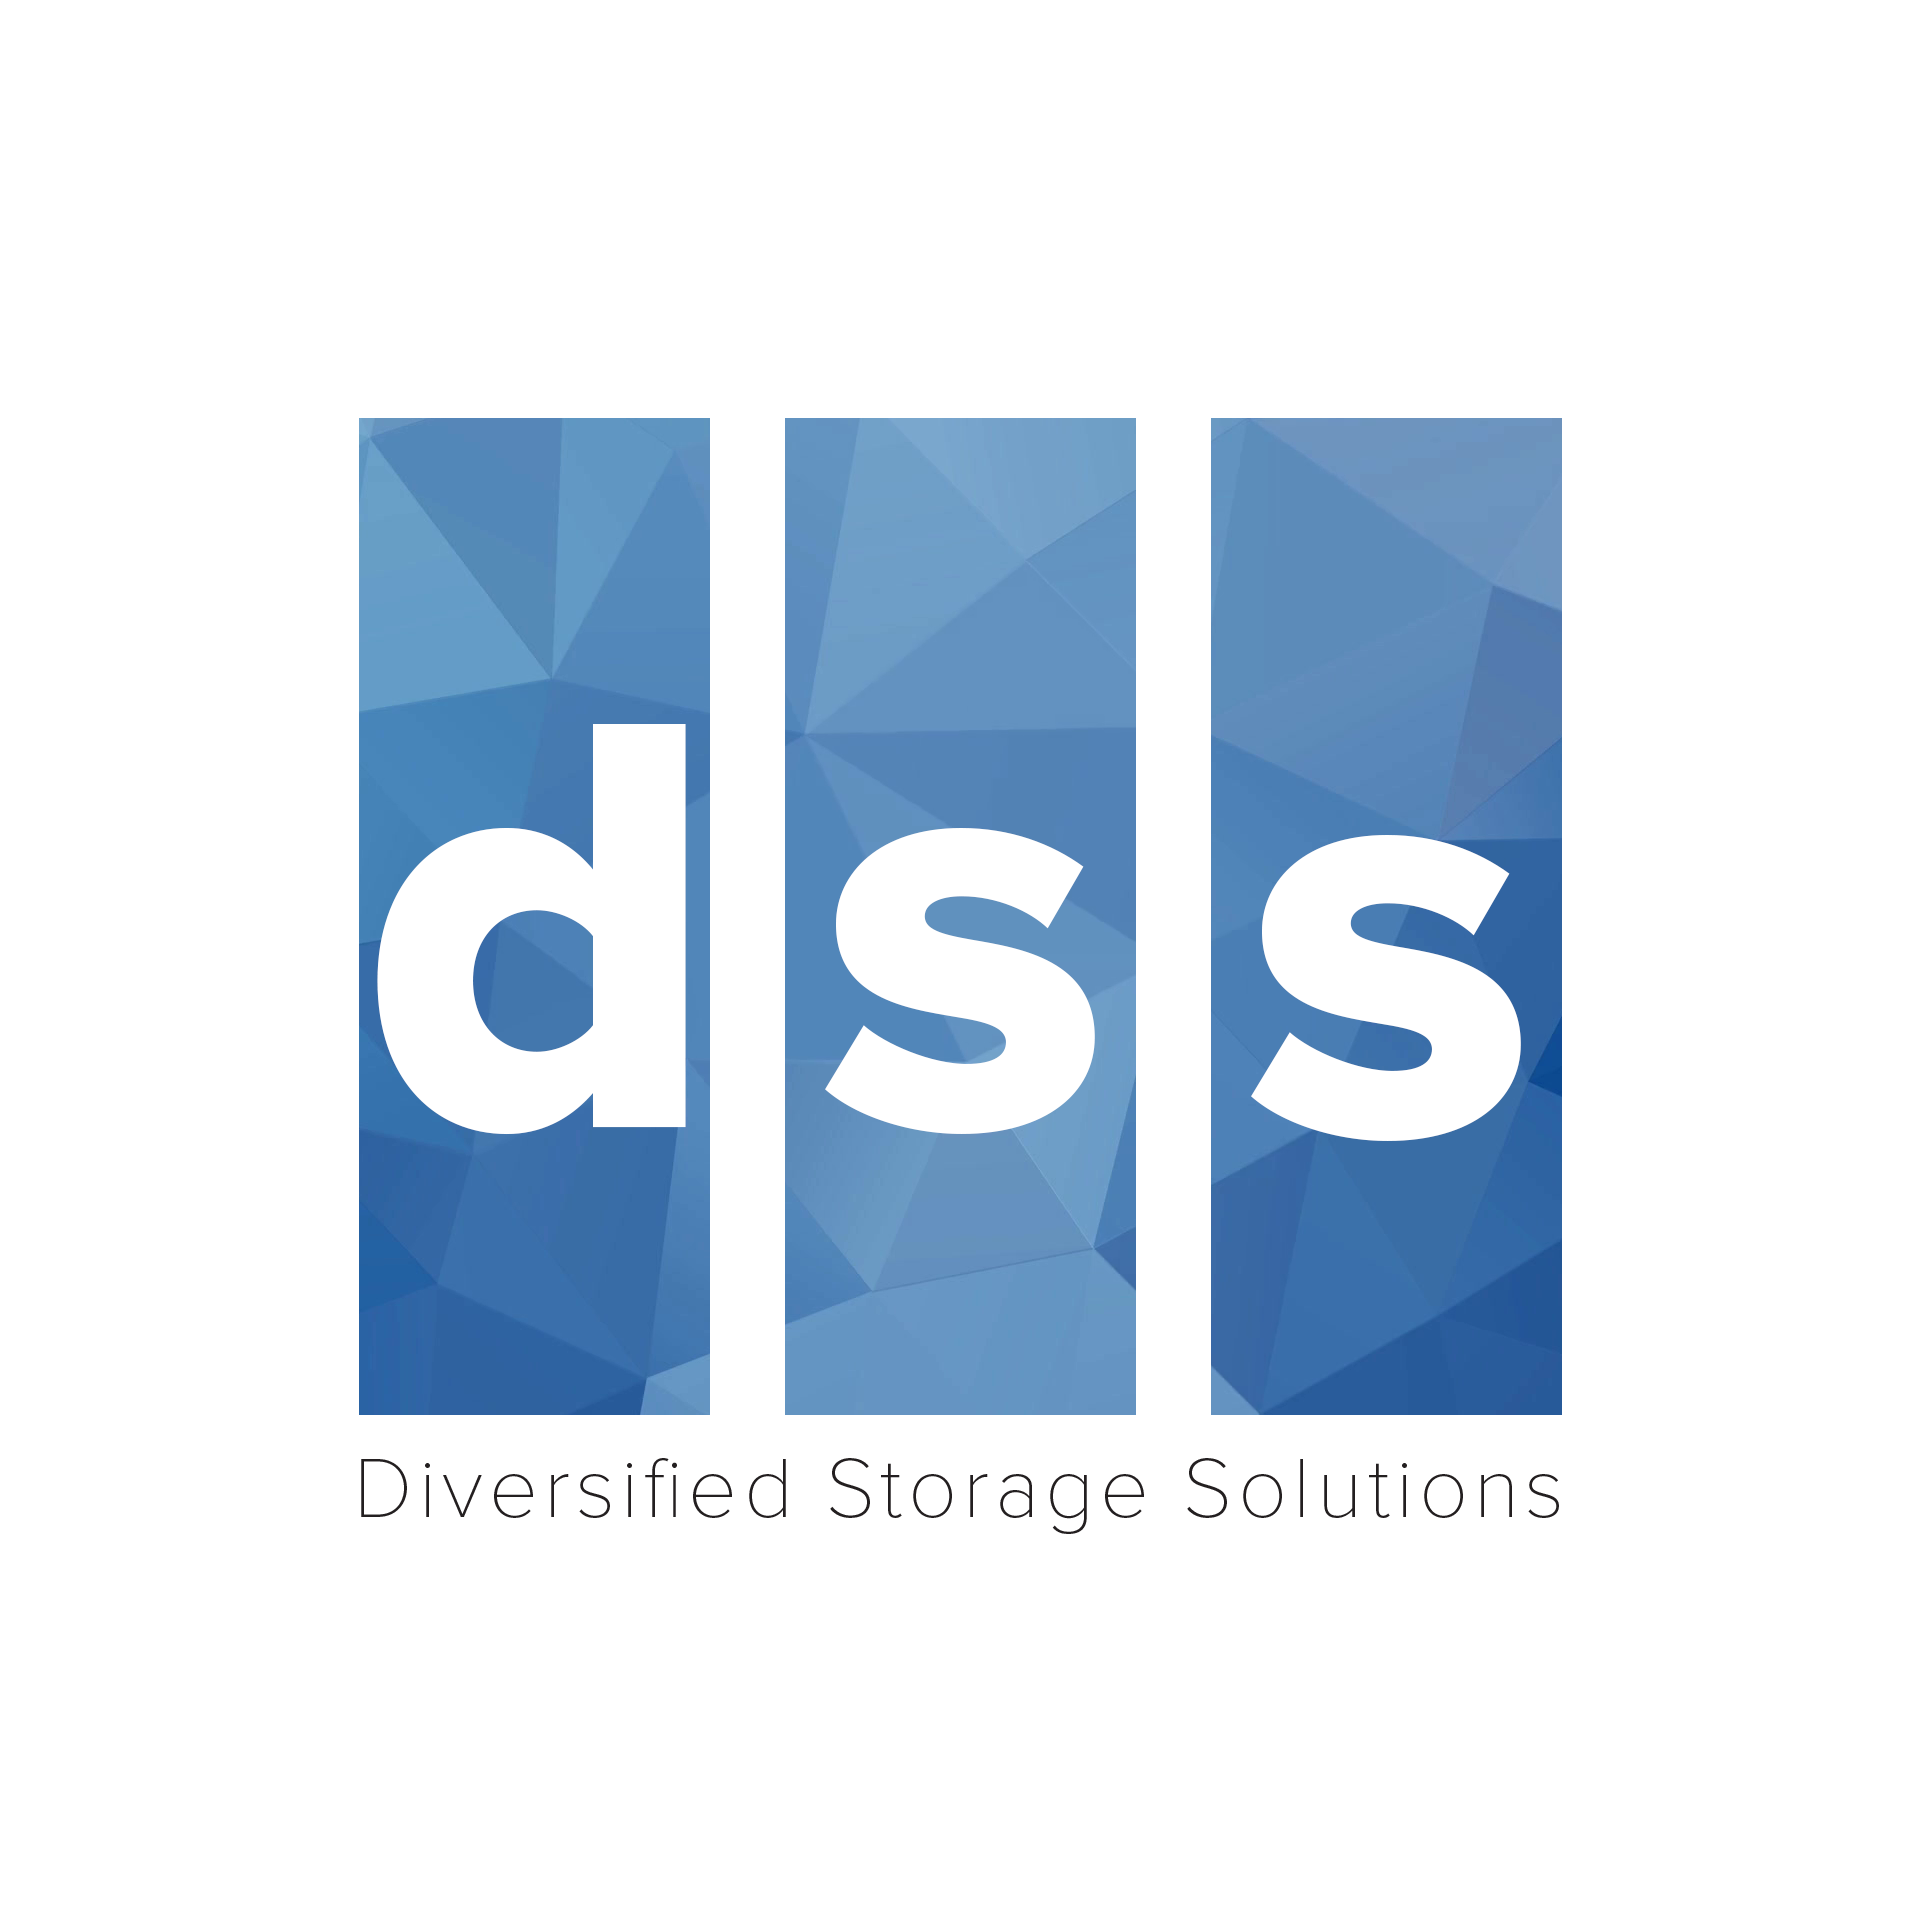 Diversified Storage Solutions logo